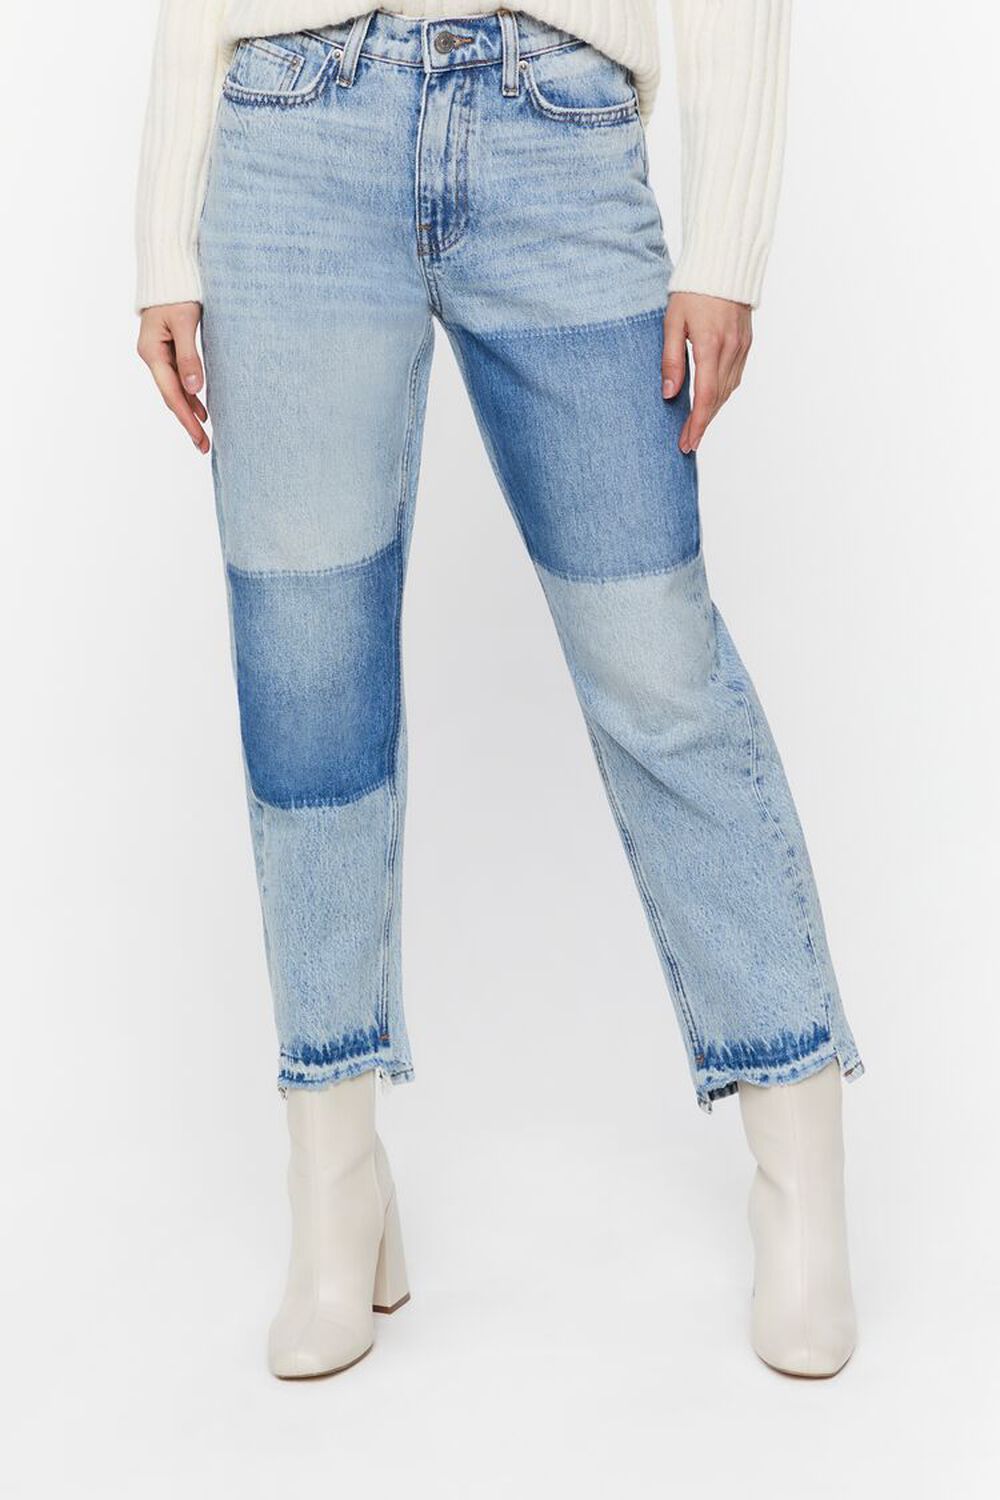 MEDIUM DENIM High-Rise Colorblock Straight Jeans, image 1